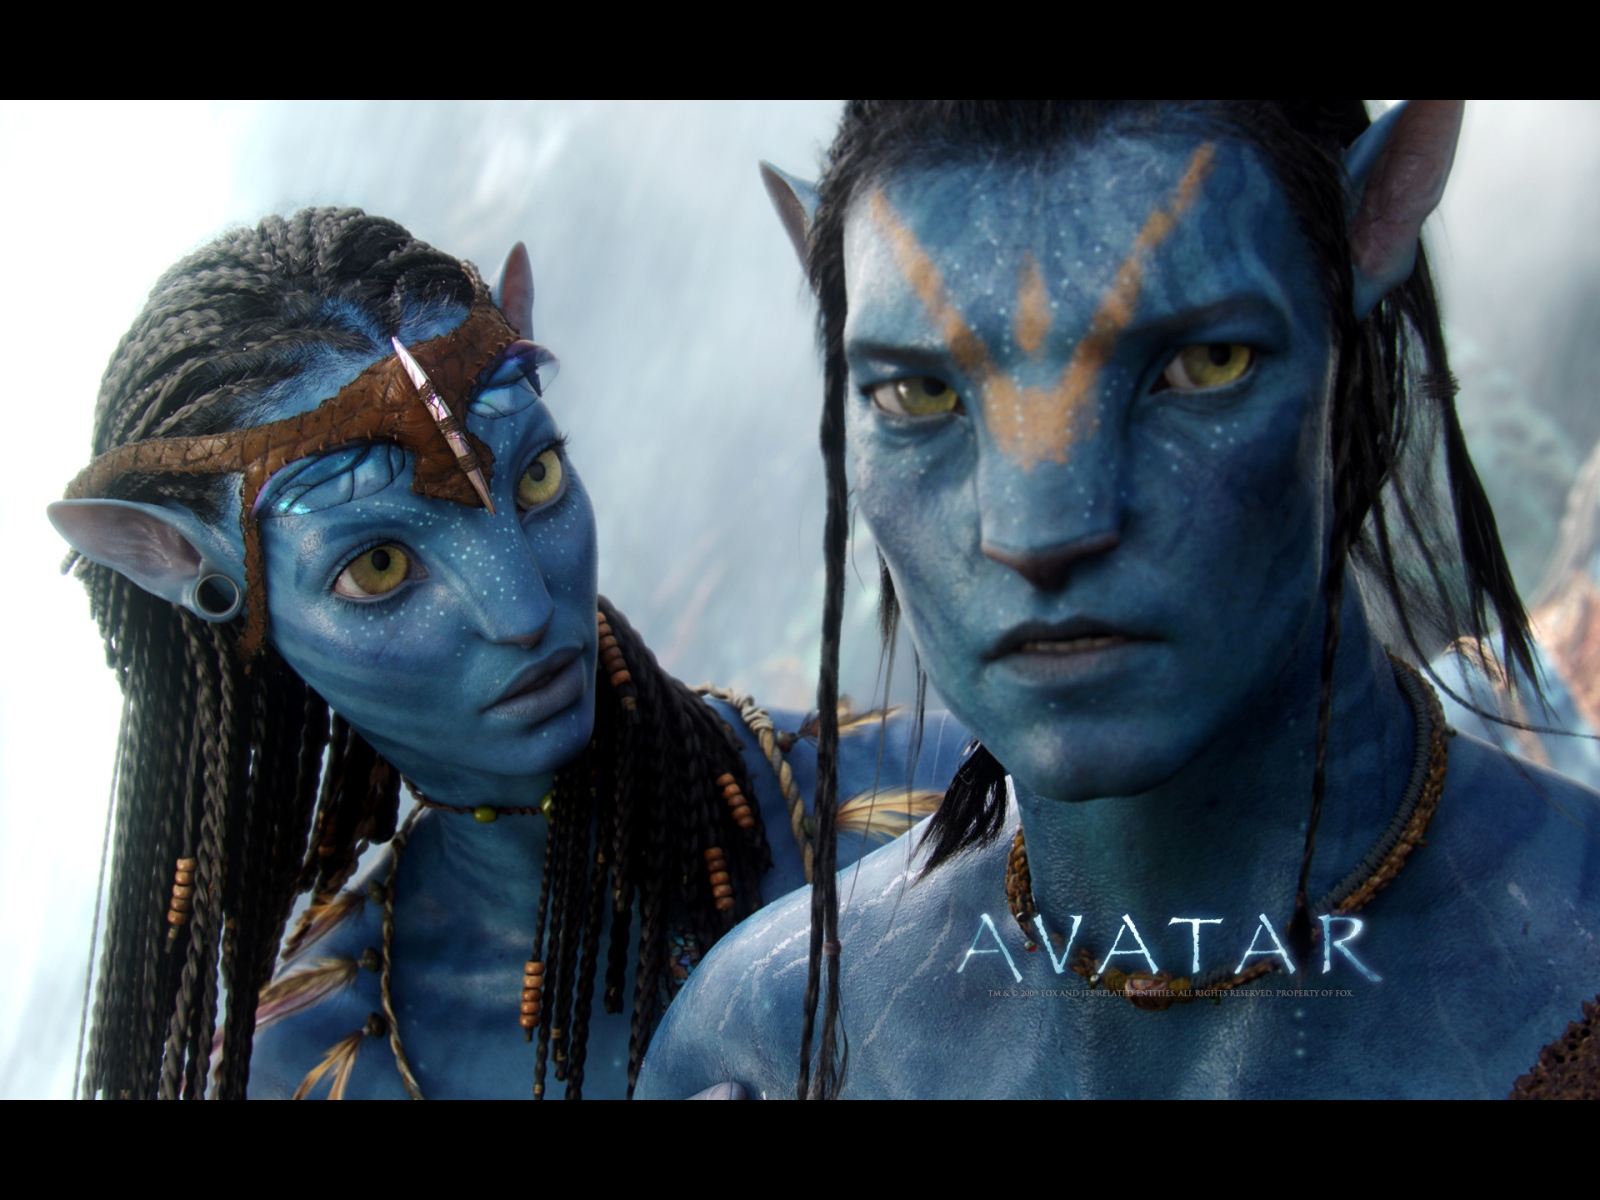 James Cameron's "Avatar" desktop wallpaper number 4 (1600 x 1200 pixels)